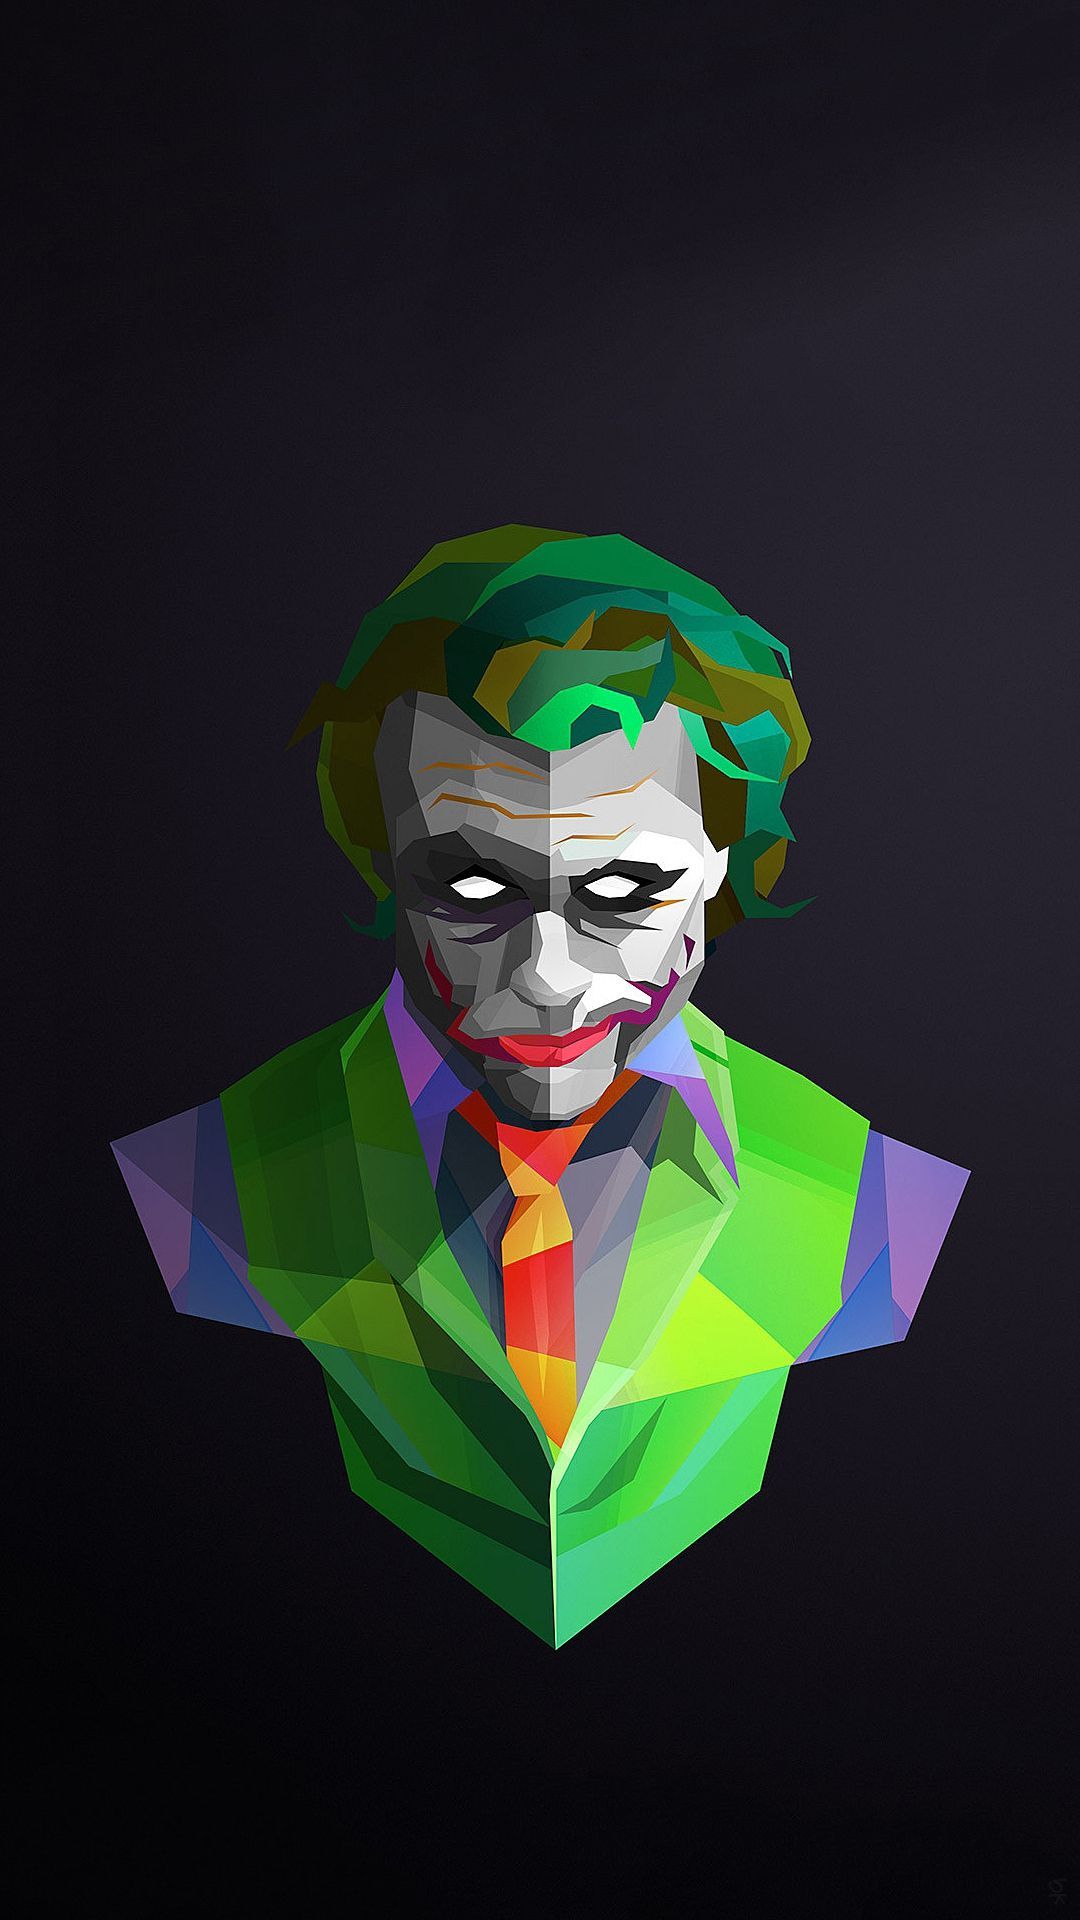 The Joker iPhone Wallpaper Free The Joker iPhone Background